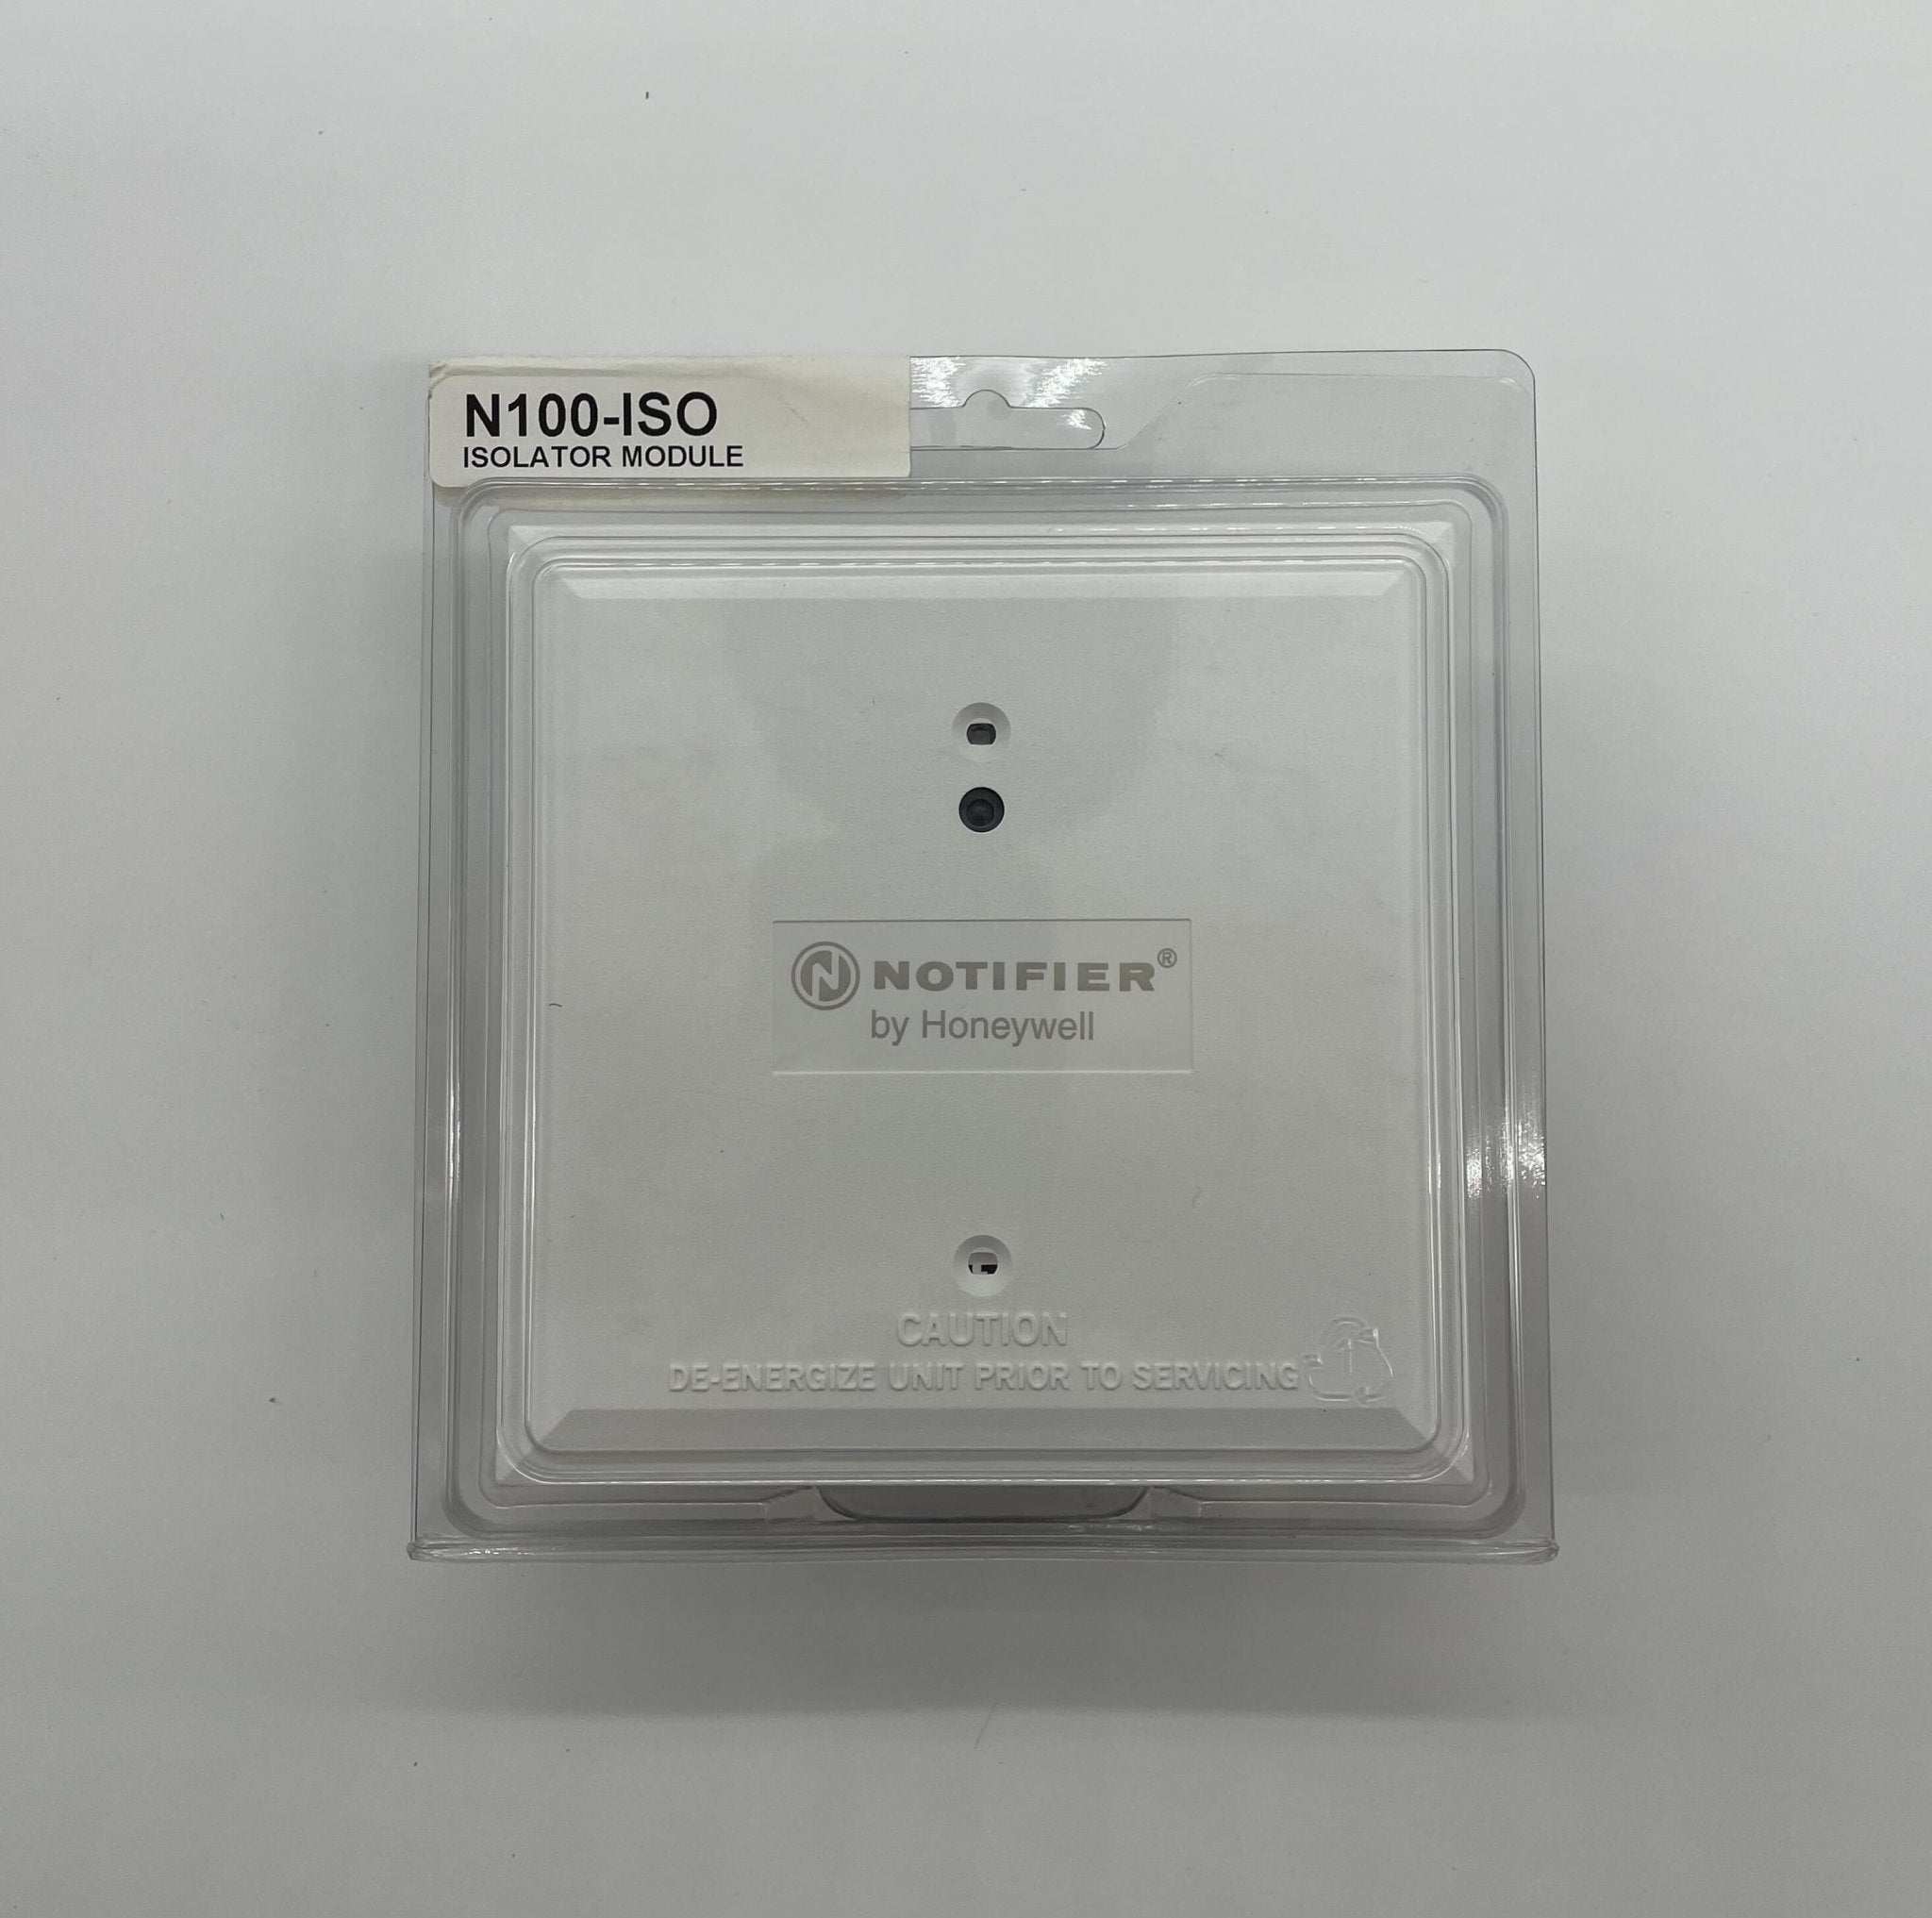 Notifier N100-ISO - The Fire Alarm Supplier